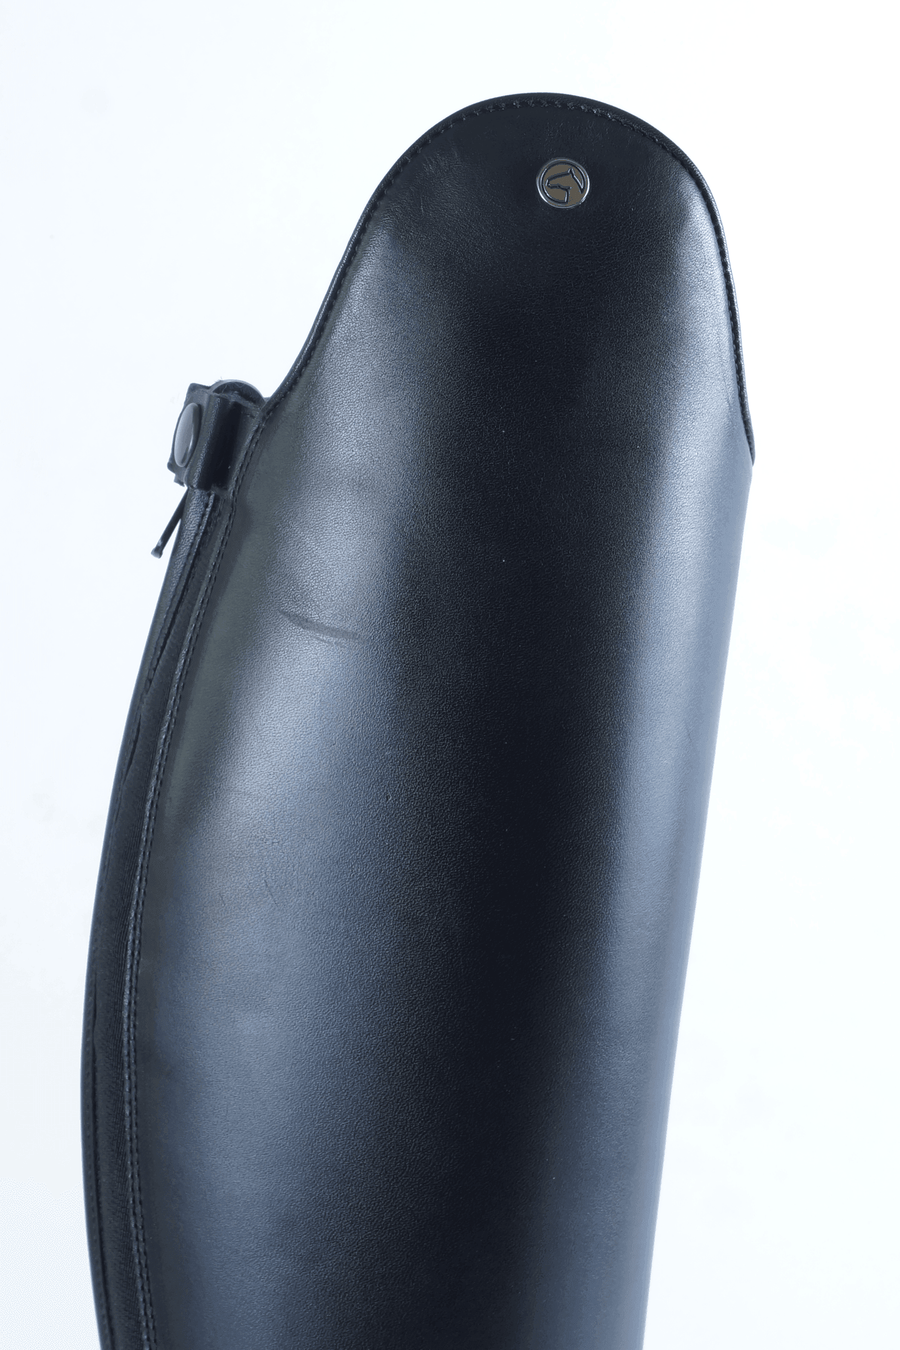 De Niro Tricolore Puro dress boot smooth brown leather - HorseworldEU